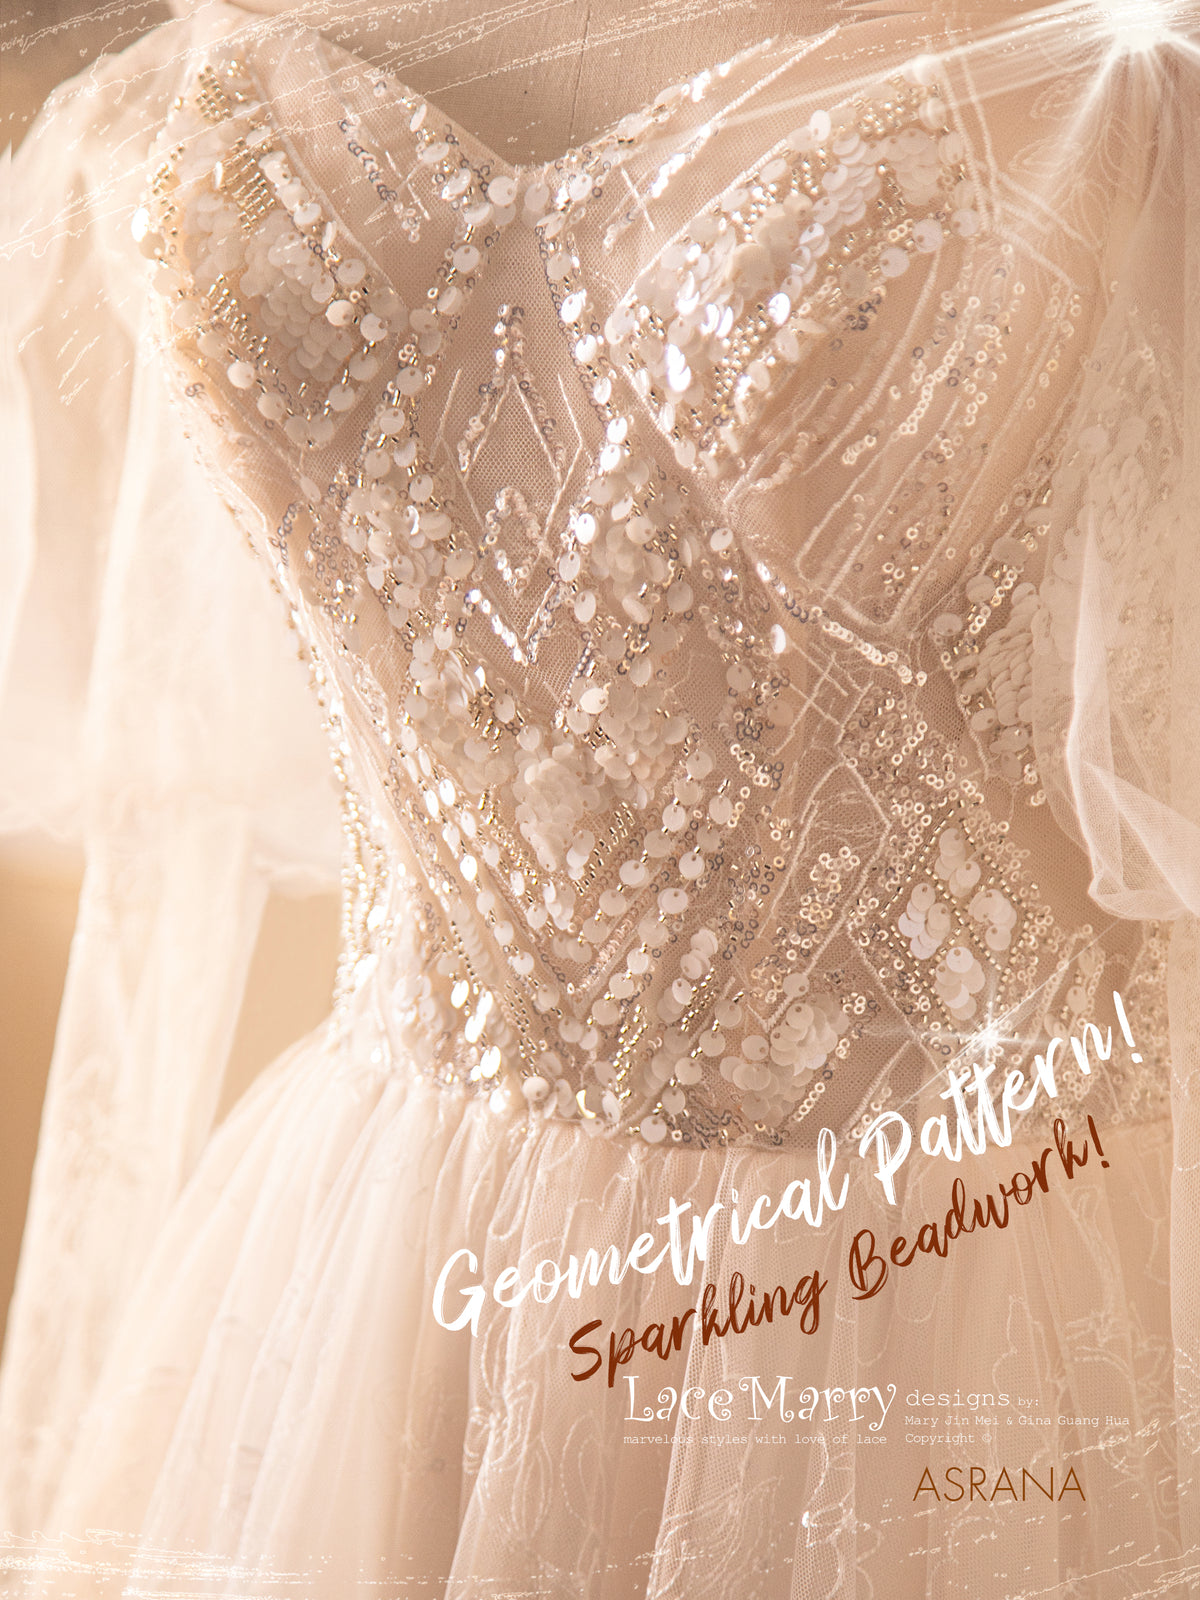 ASRANA / A Line Wedding Dress with Puff Shoulders Design